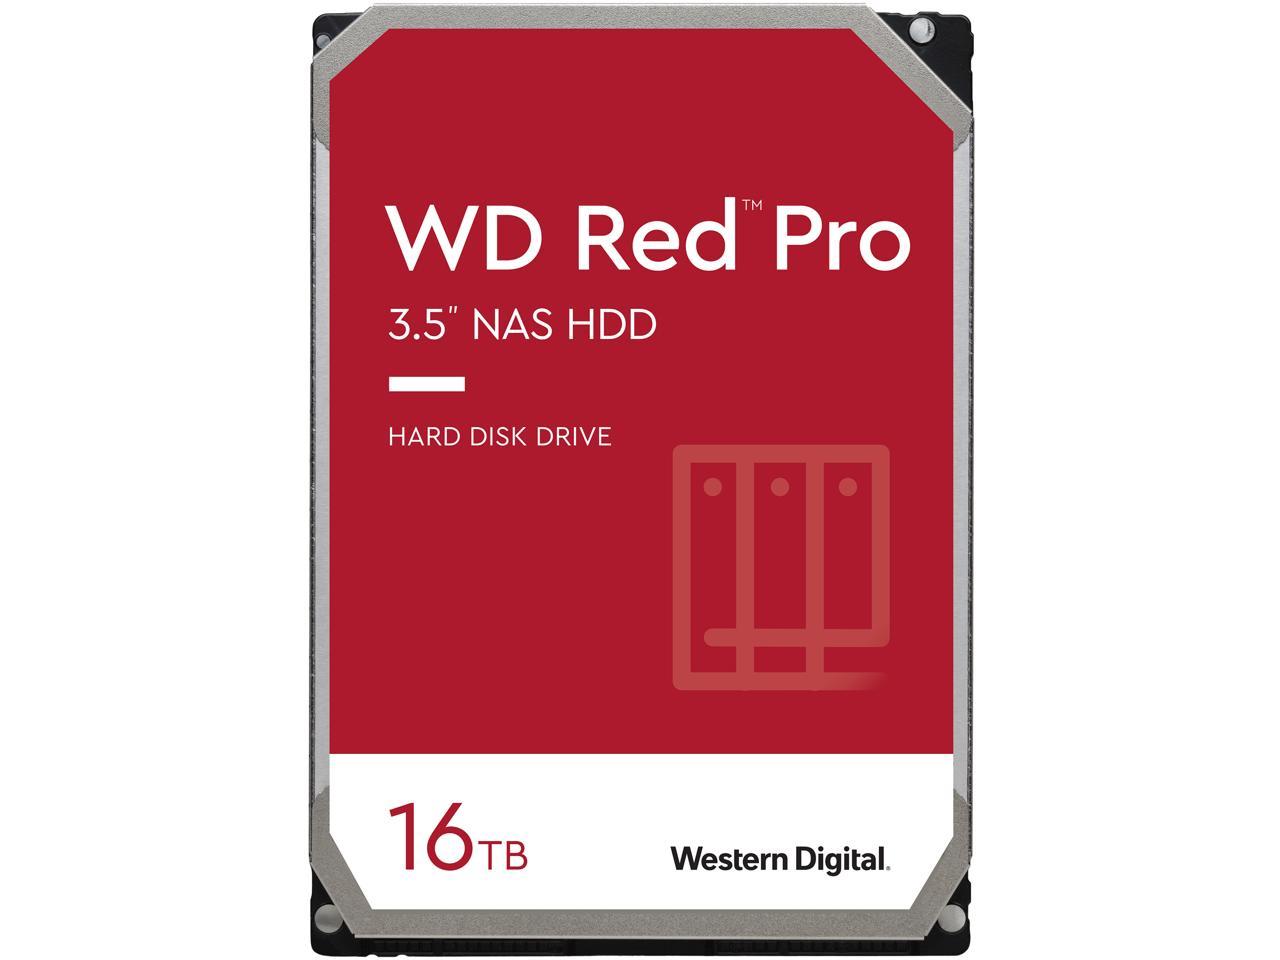 16TB WD Red Pro NAS Internal 3.5" Hard Drive $270